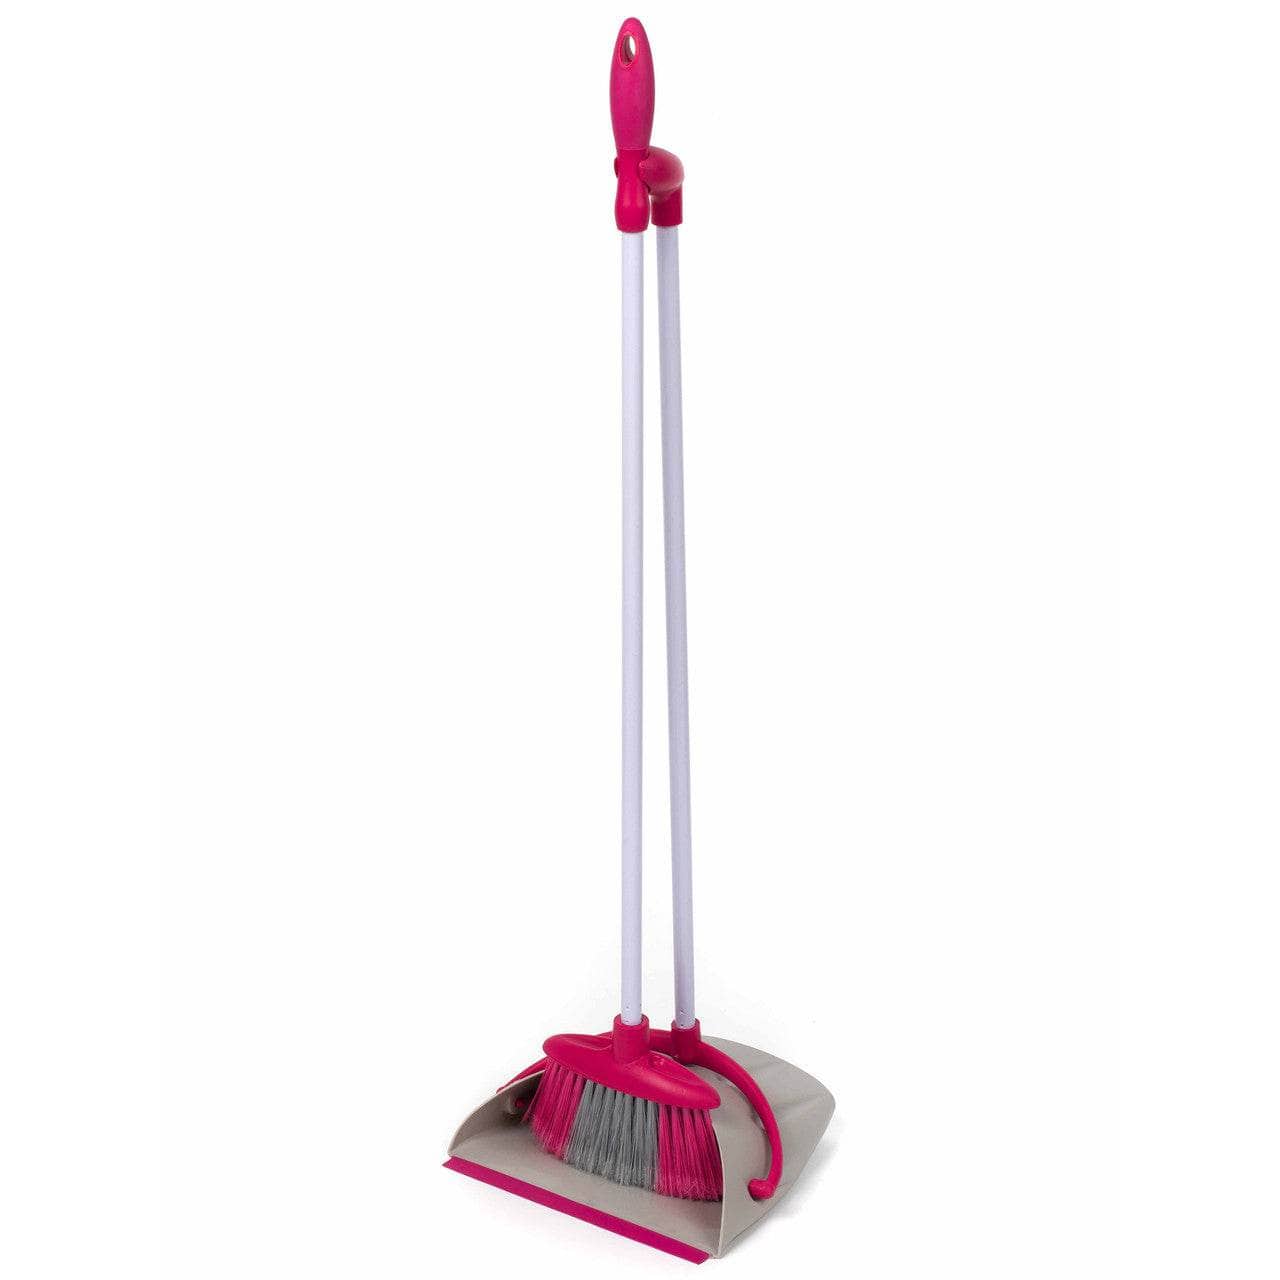  -  Self-Standing Dustpan And Broom Set  -  60004885